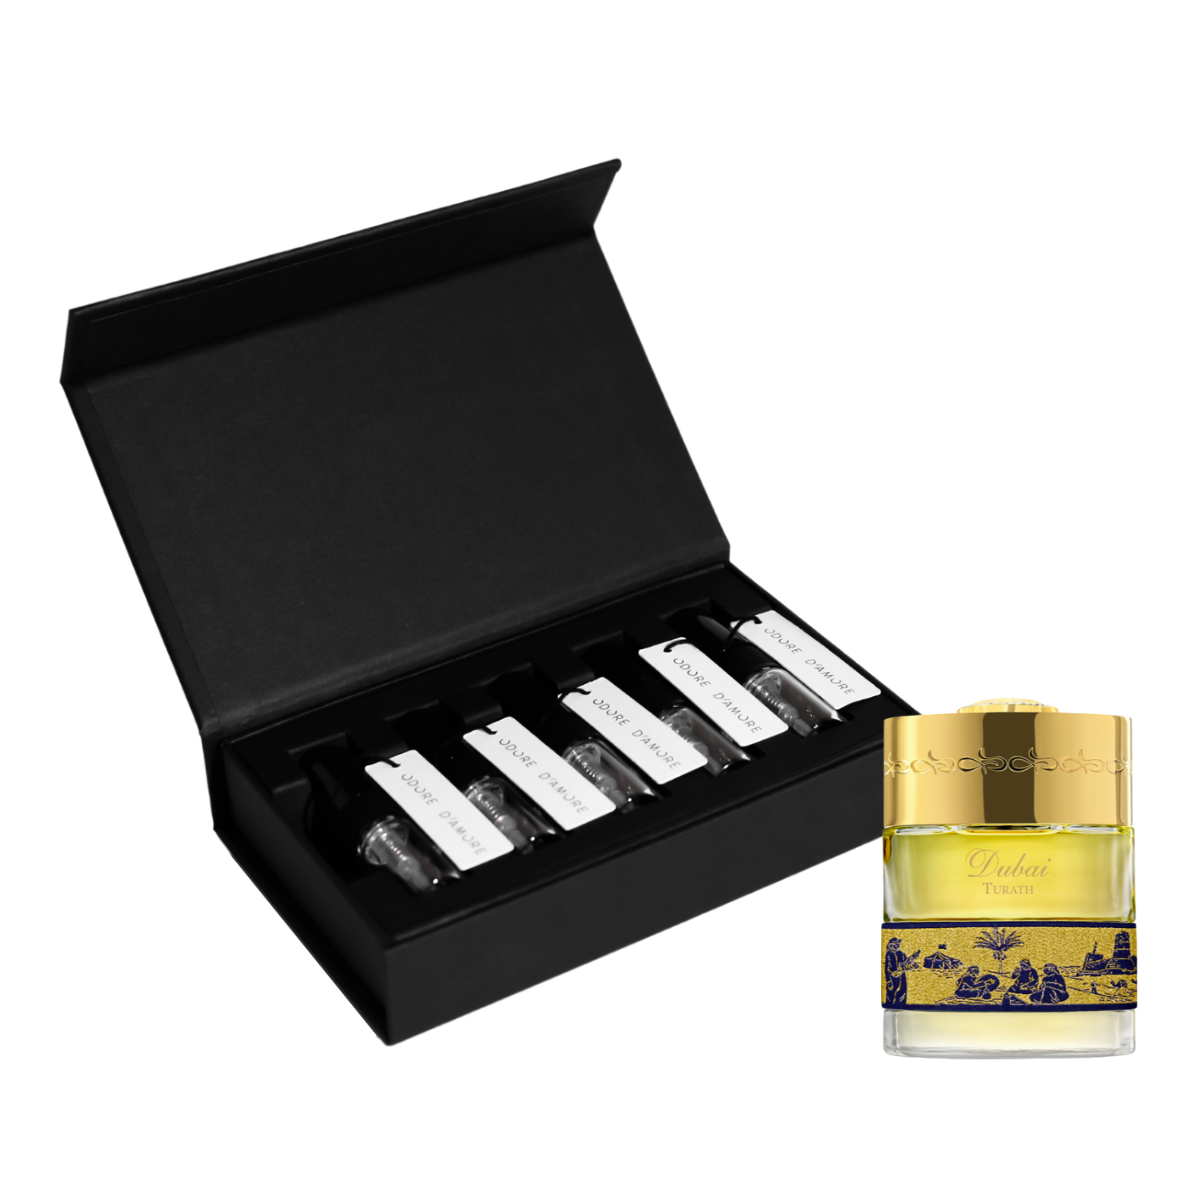 Spirit of Dubai Perfume Discovery Box